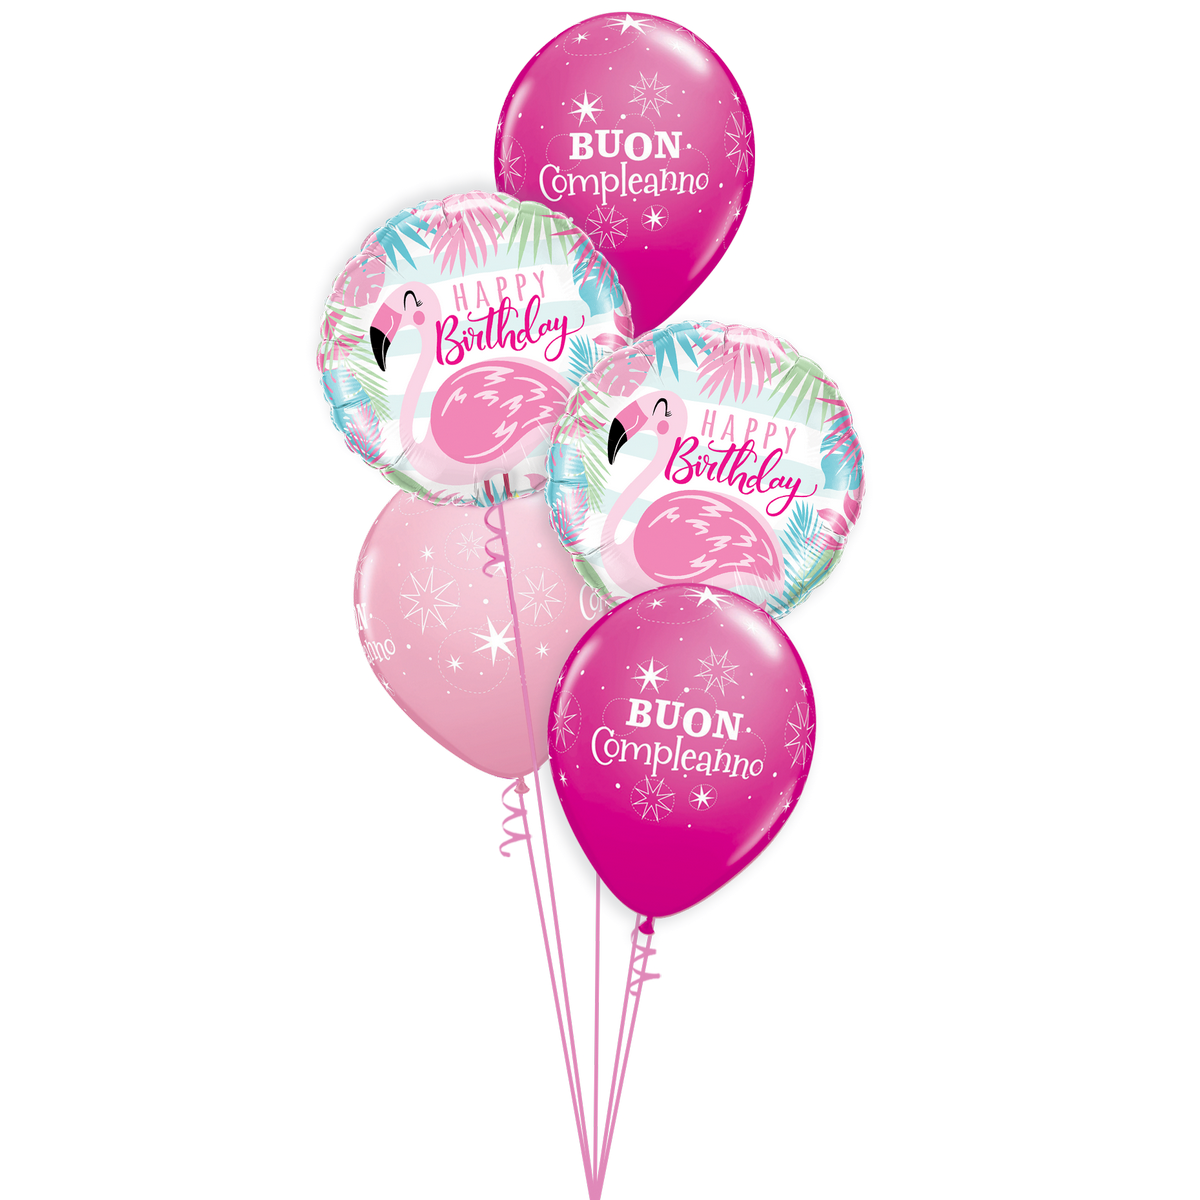 Classic Bouquet Flamingo Balloon Express Shop Torino